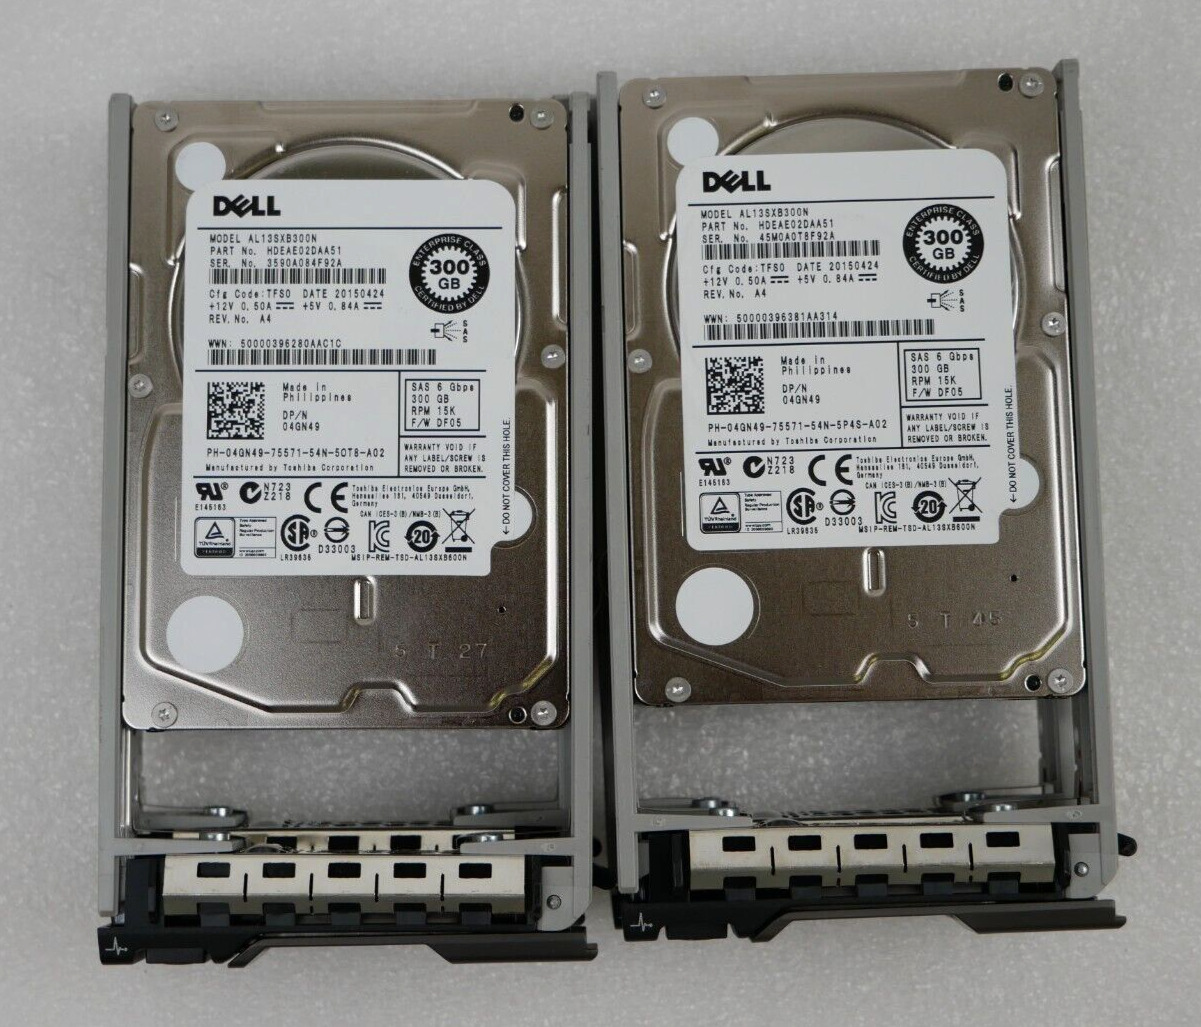 Lot of 4 Dell 04GN49 AL13SXB300N 300GB 15K 6G SAS 2.5